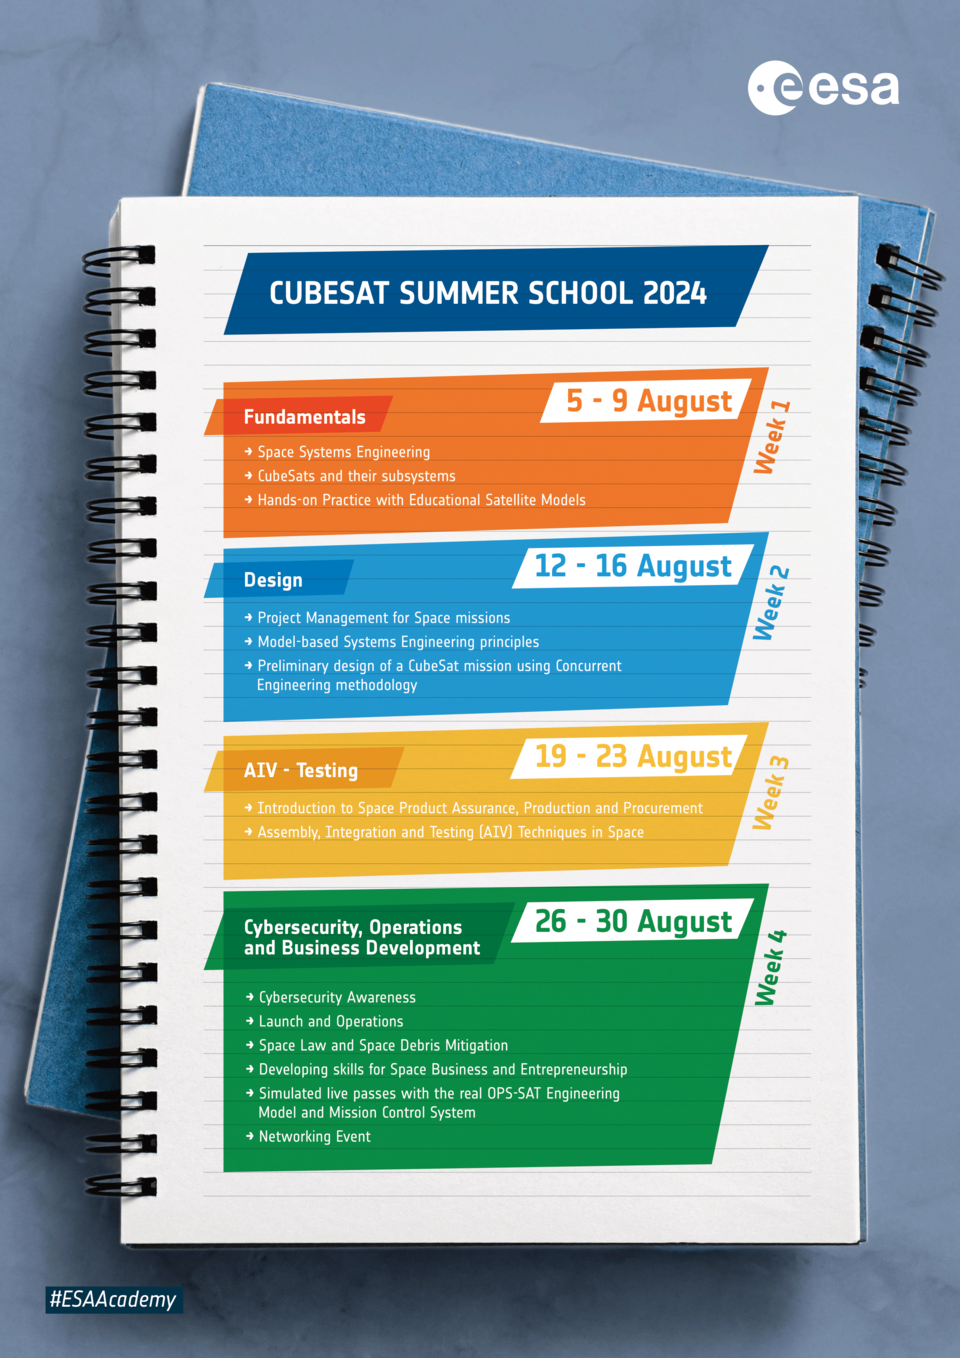 Programme of ESA Academy's CubeSat Summer School 2024 